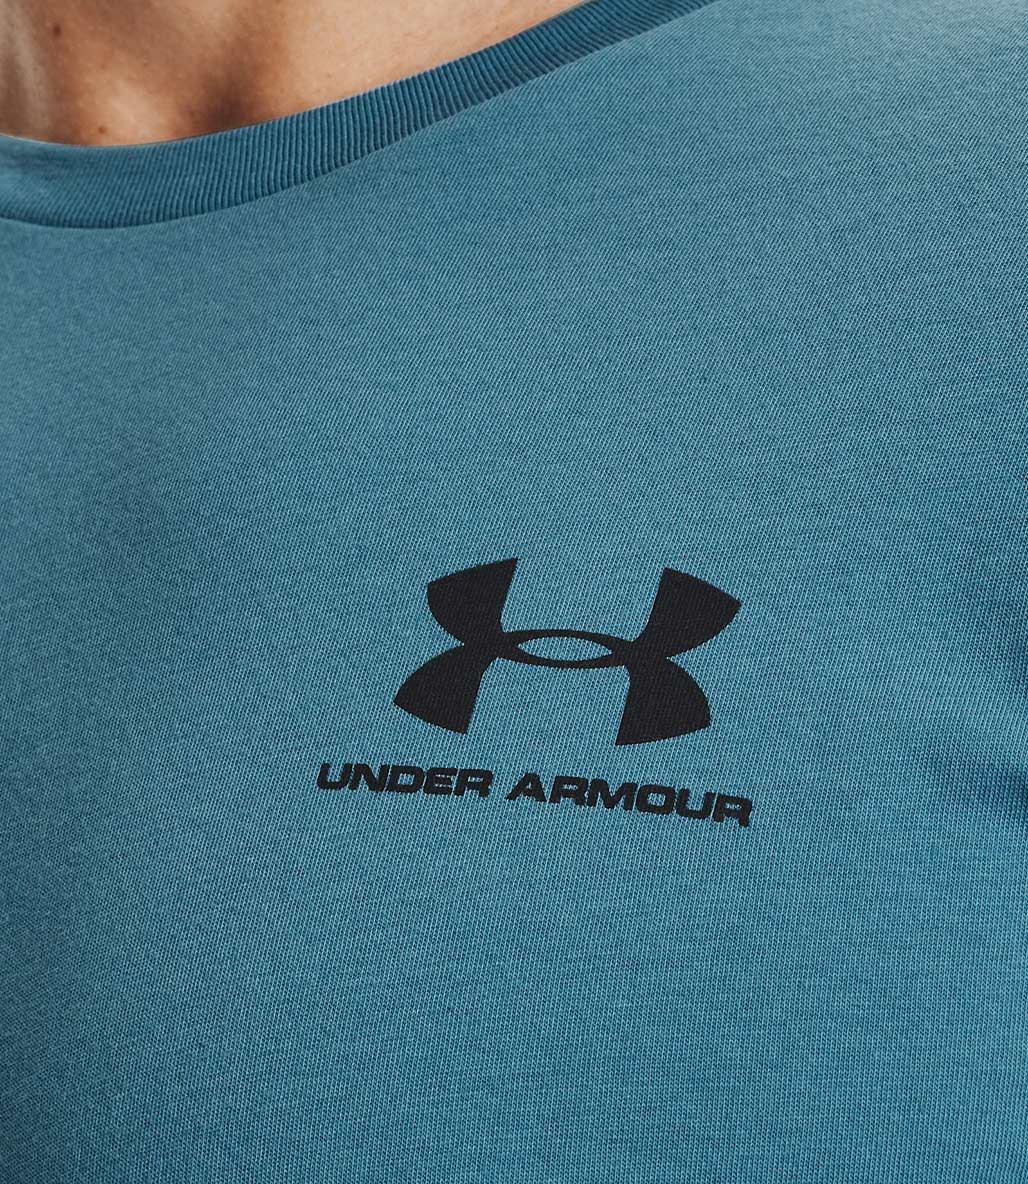 Under Armour Sportstyle Left Chest T-Shirt Açık Mavi